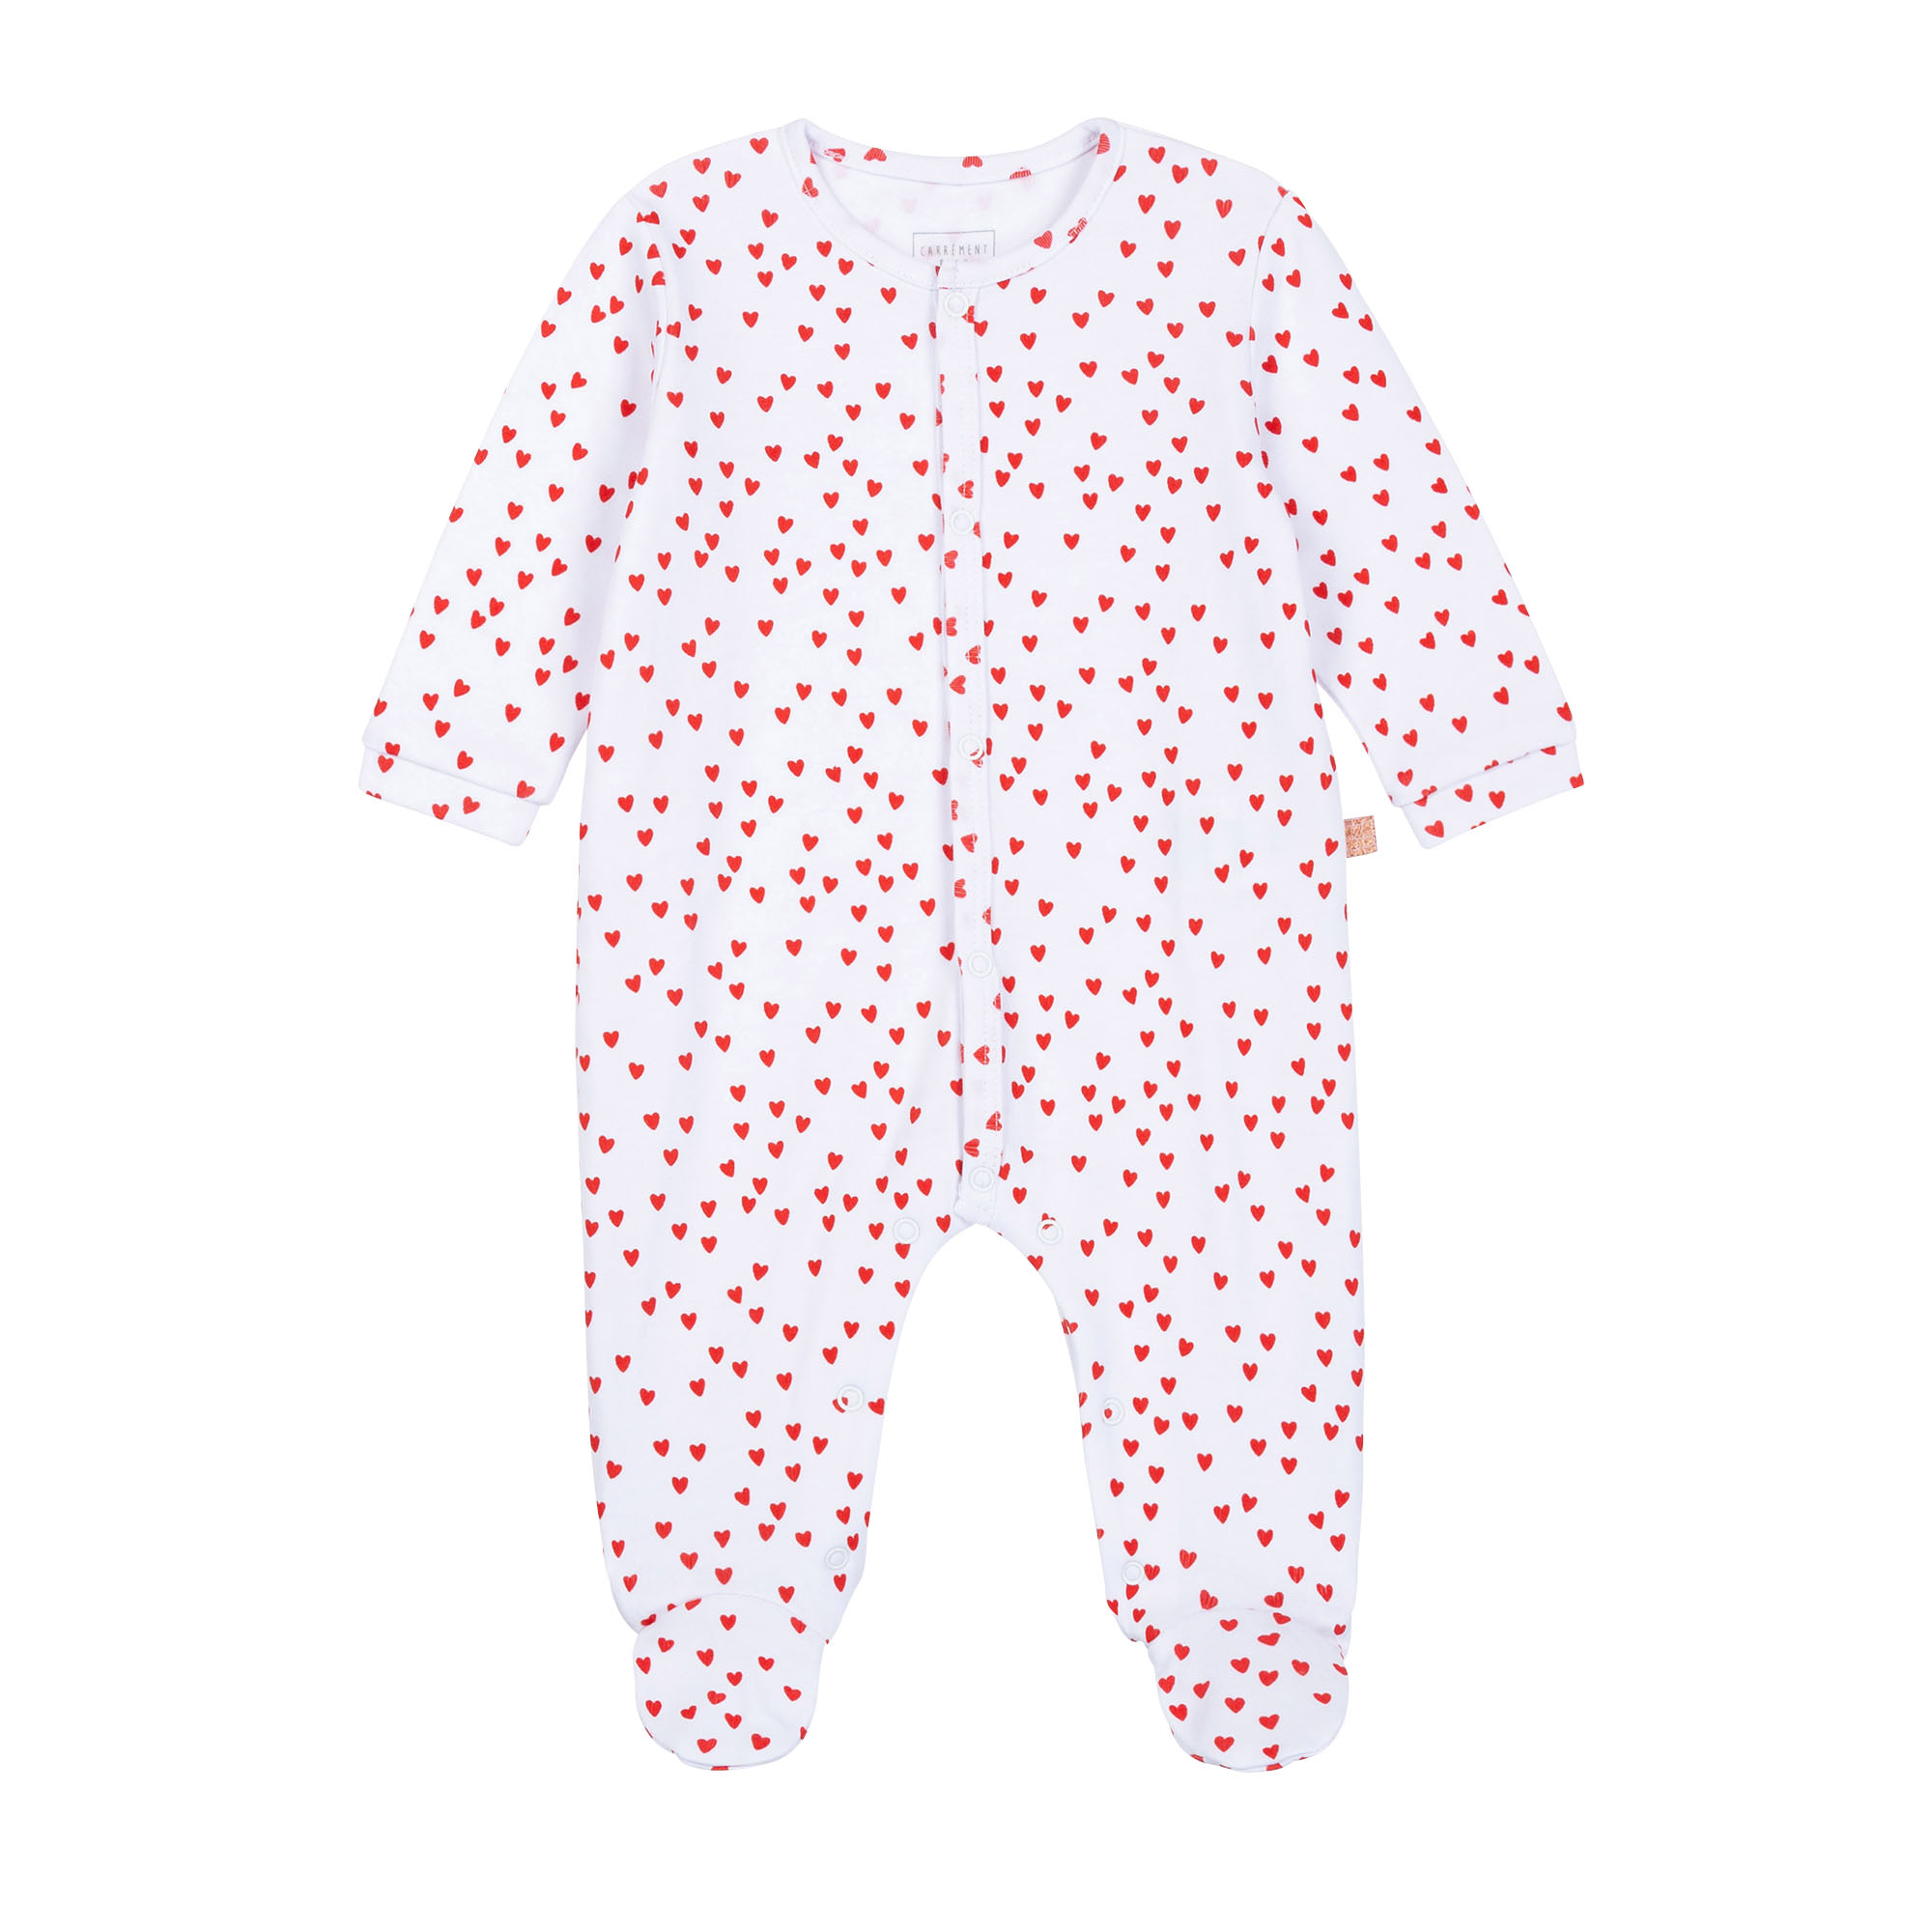 Organic cotton pajamas CARREMENT BEAU for GIRL